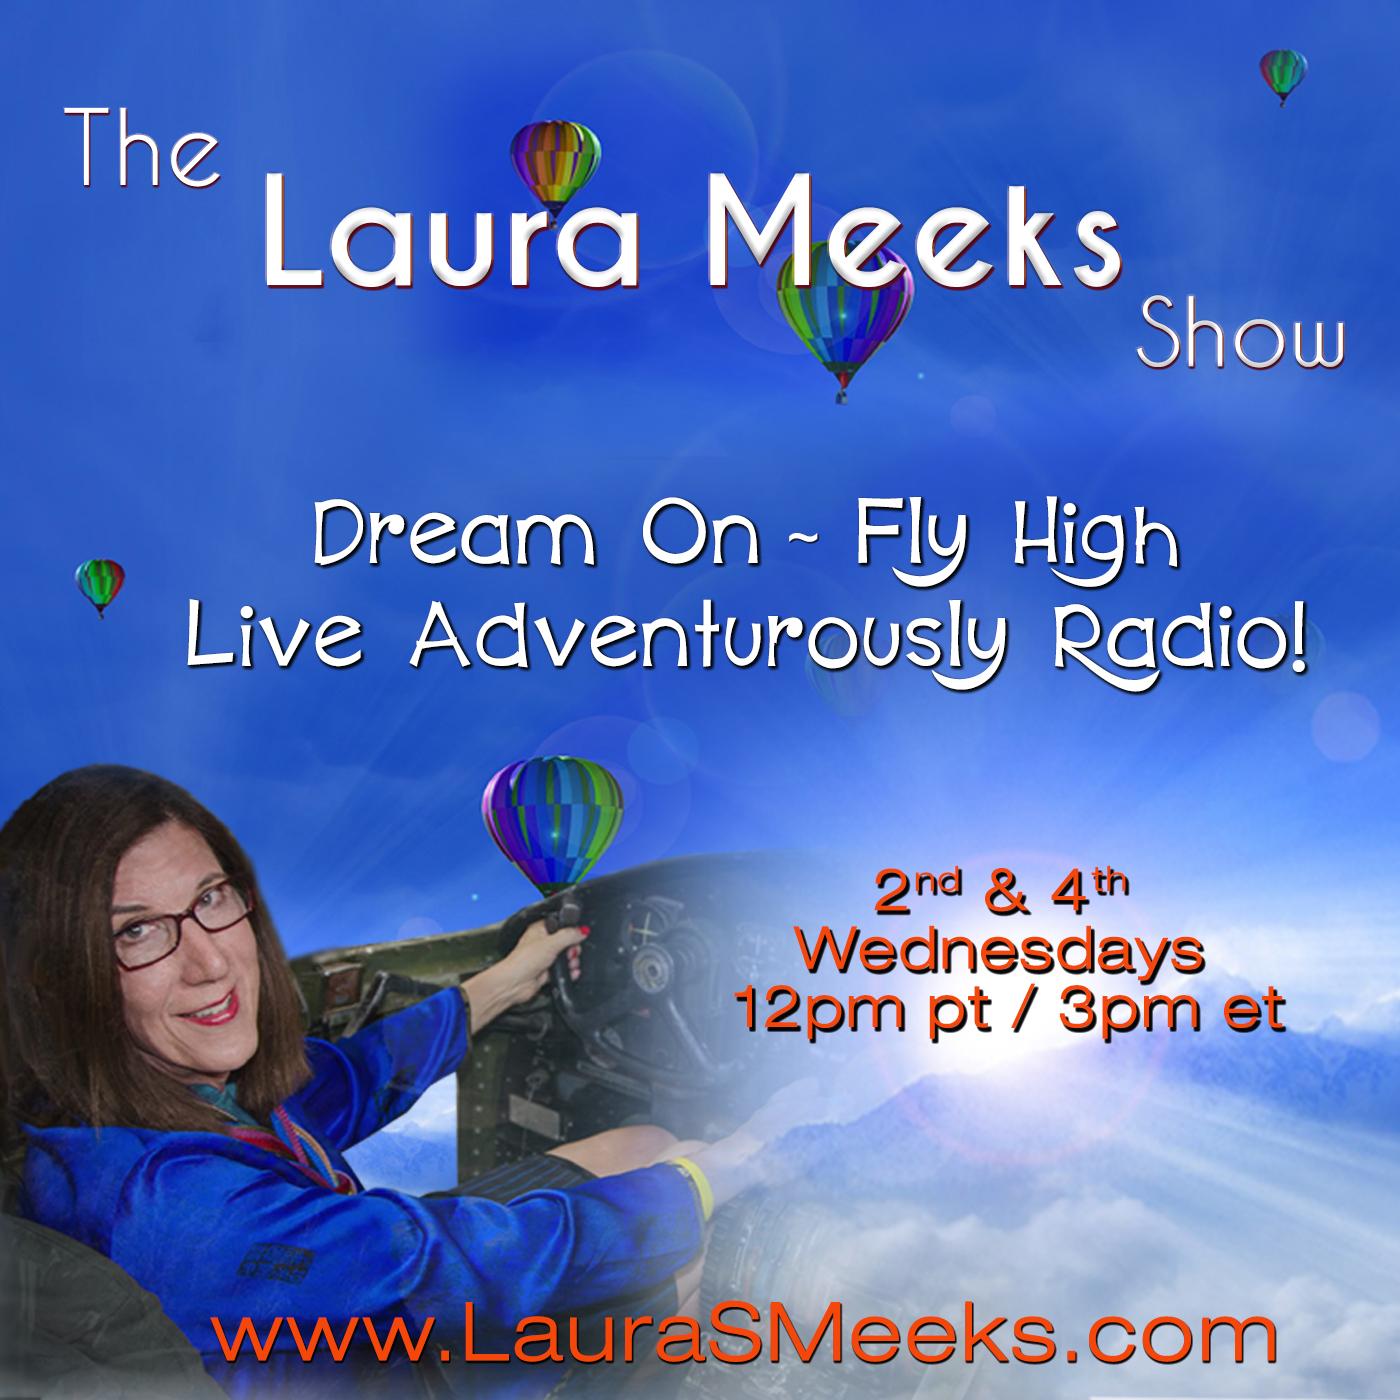 The Laura Meeks Show: Dream On - Fly High - Live Adventurously Radio